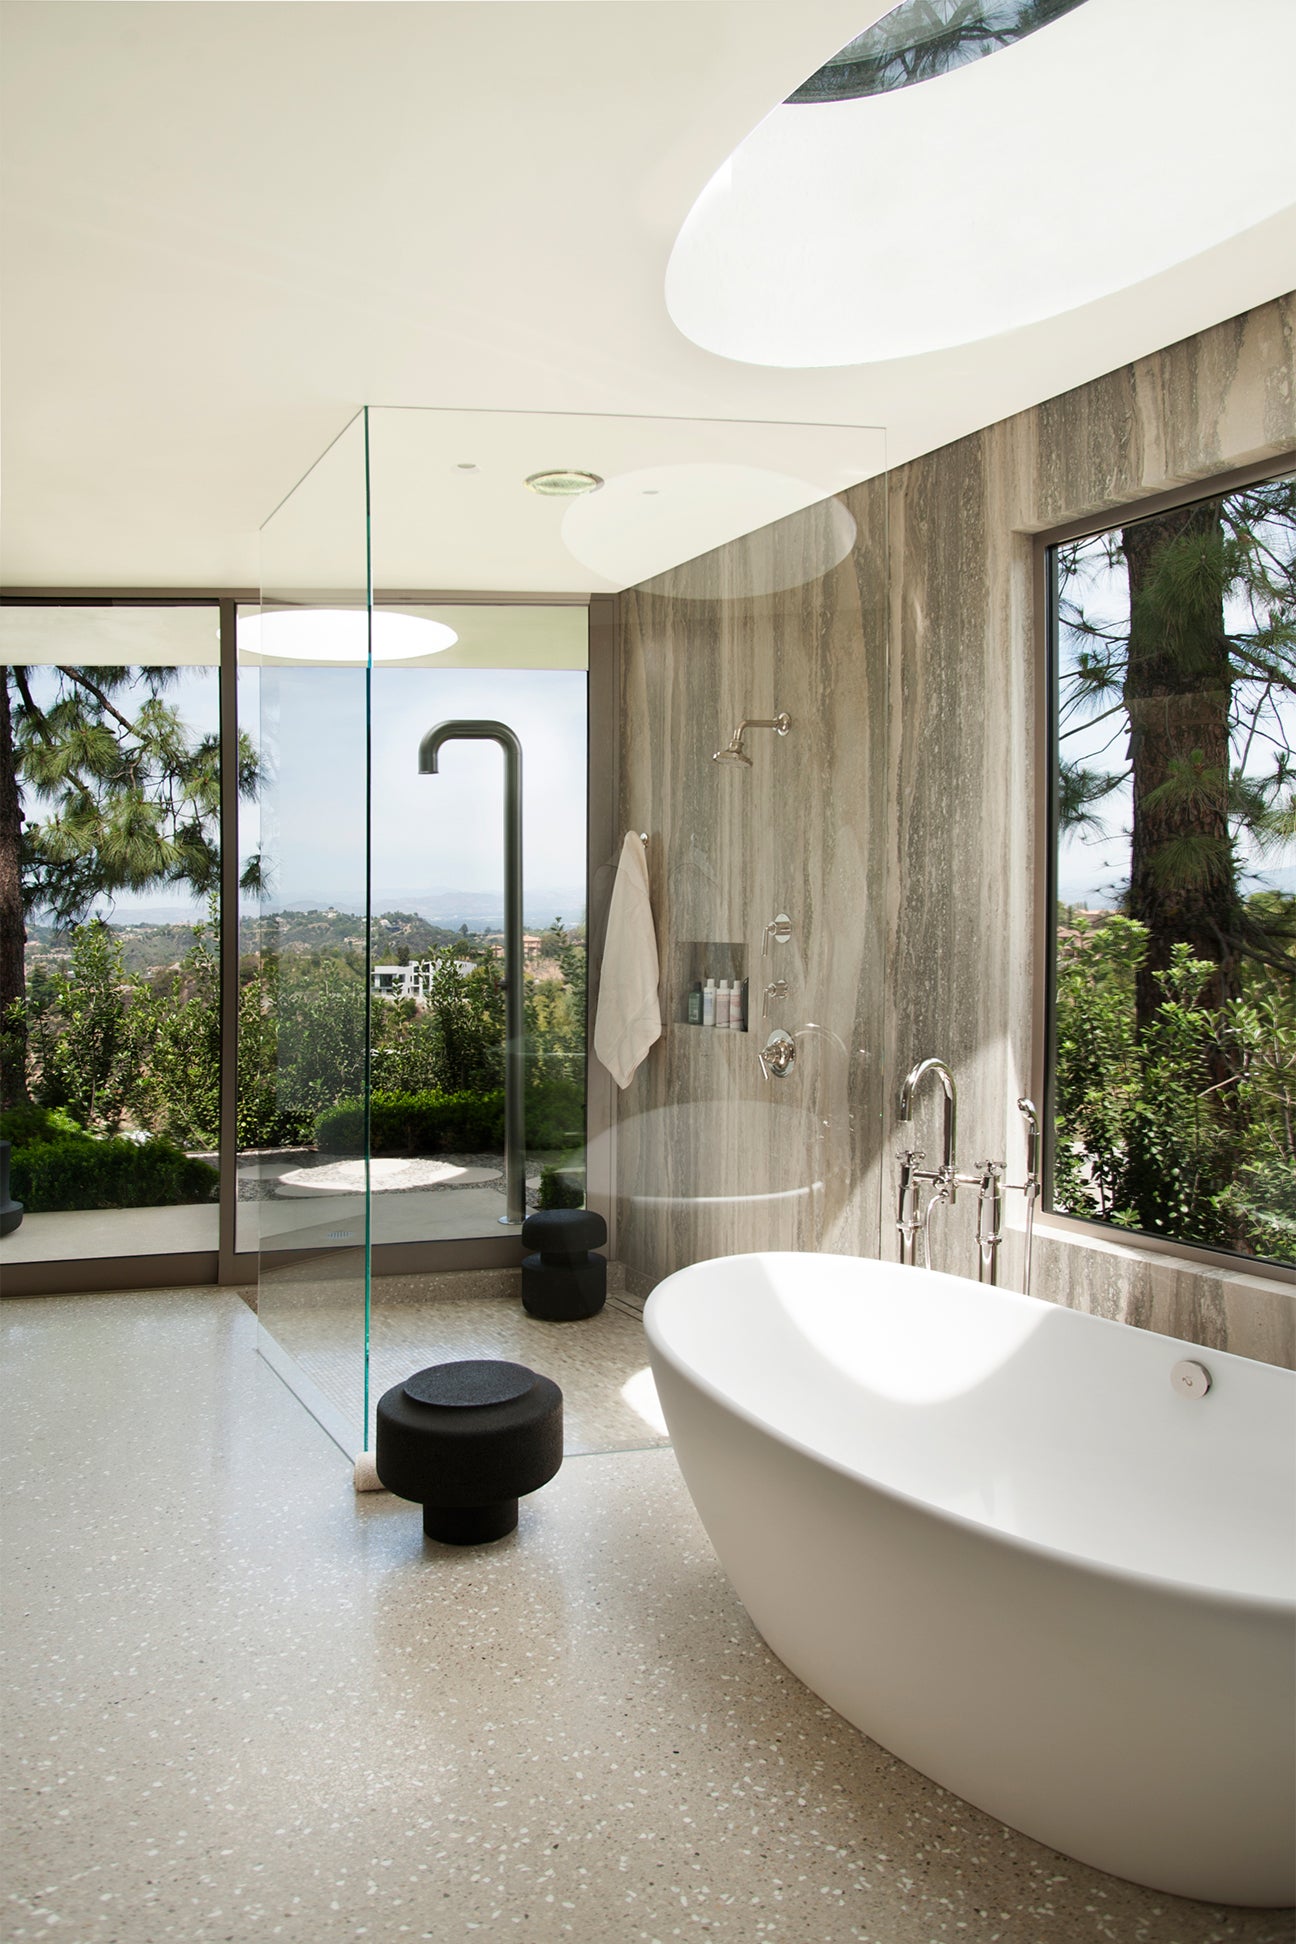 Bathroom with round skylight